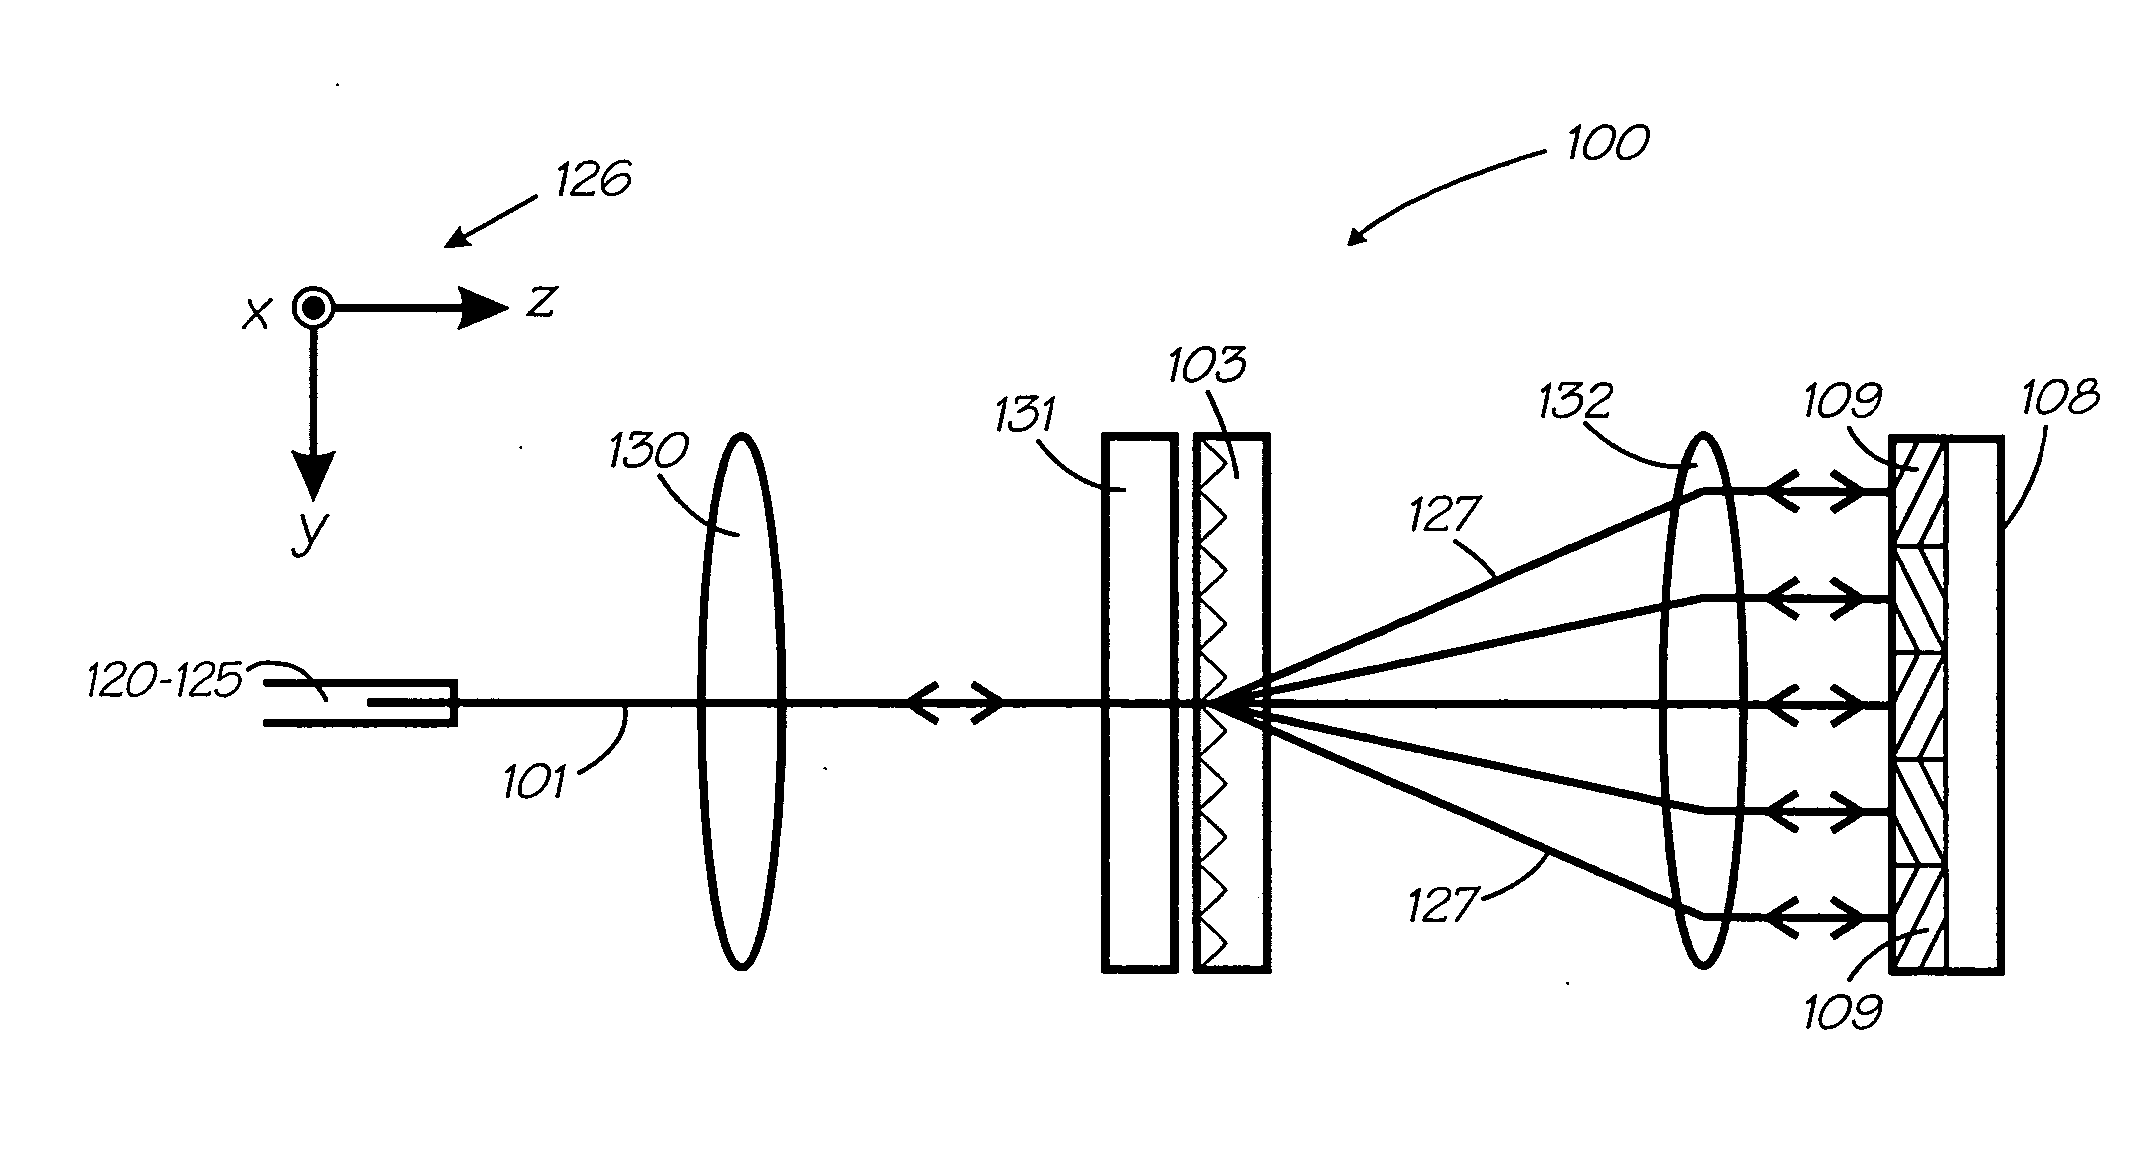 Wavelength selective reconfigurable optical cross-connect